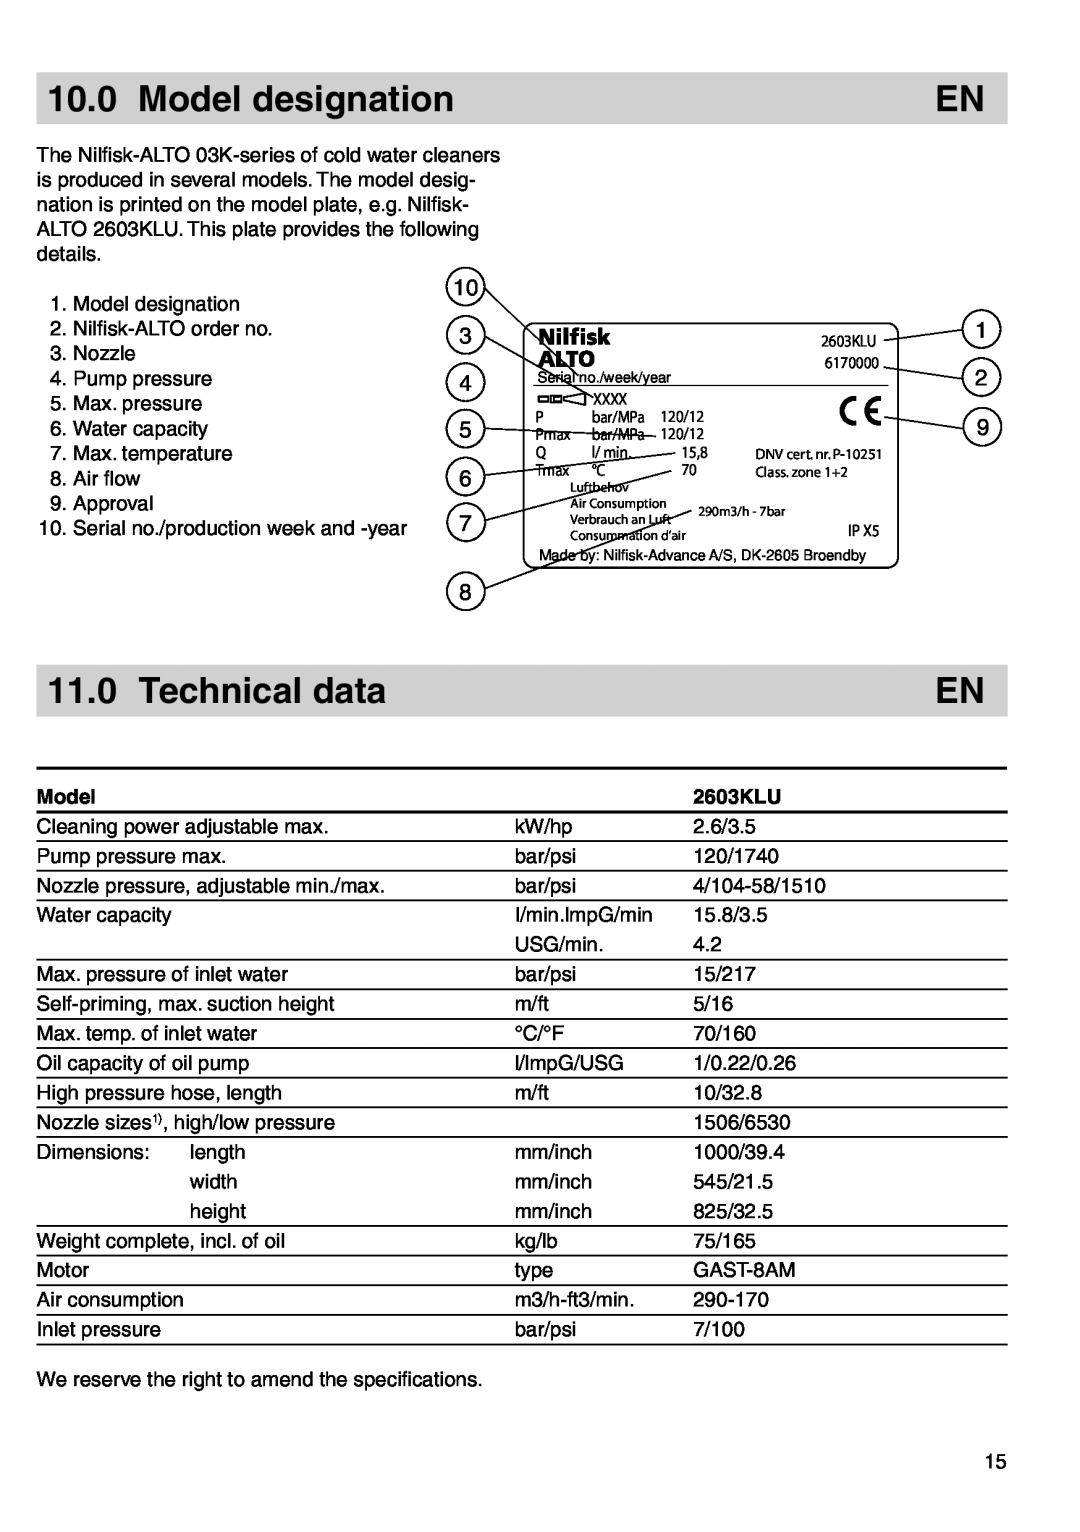 Nilfisk-ALTO user manual Model designation, Technical data, 2603KLU, width 